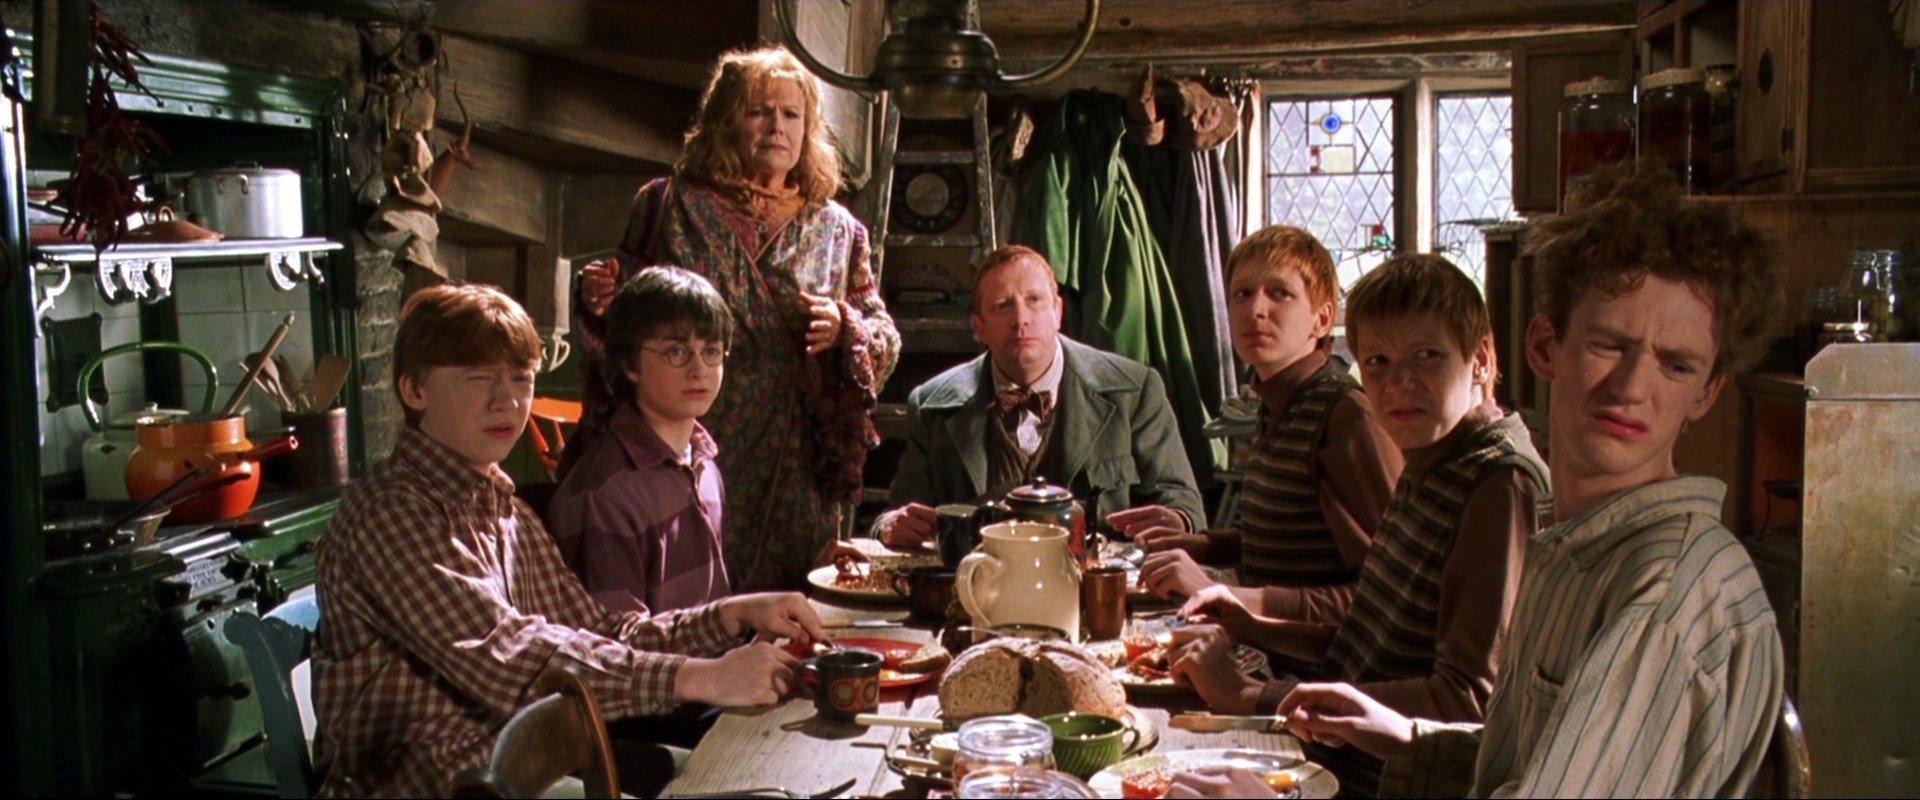 Wizarding Workshop in Porto traz ator de Harry Potter a Portugal